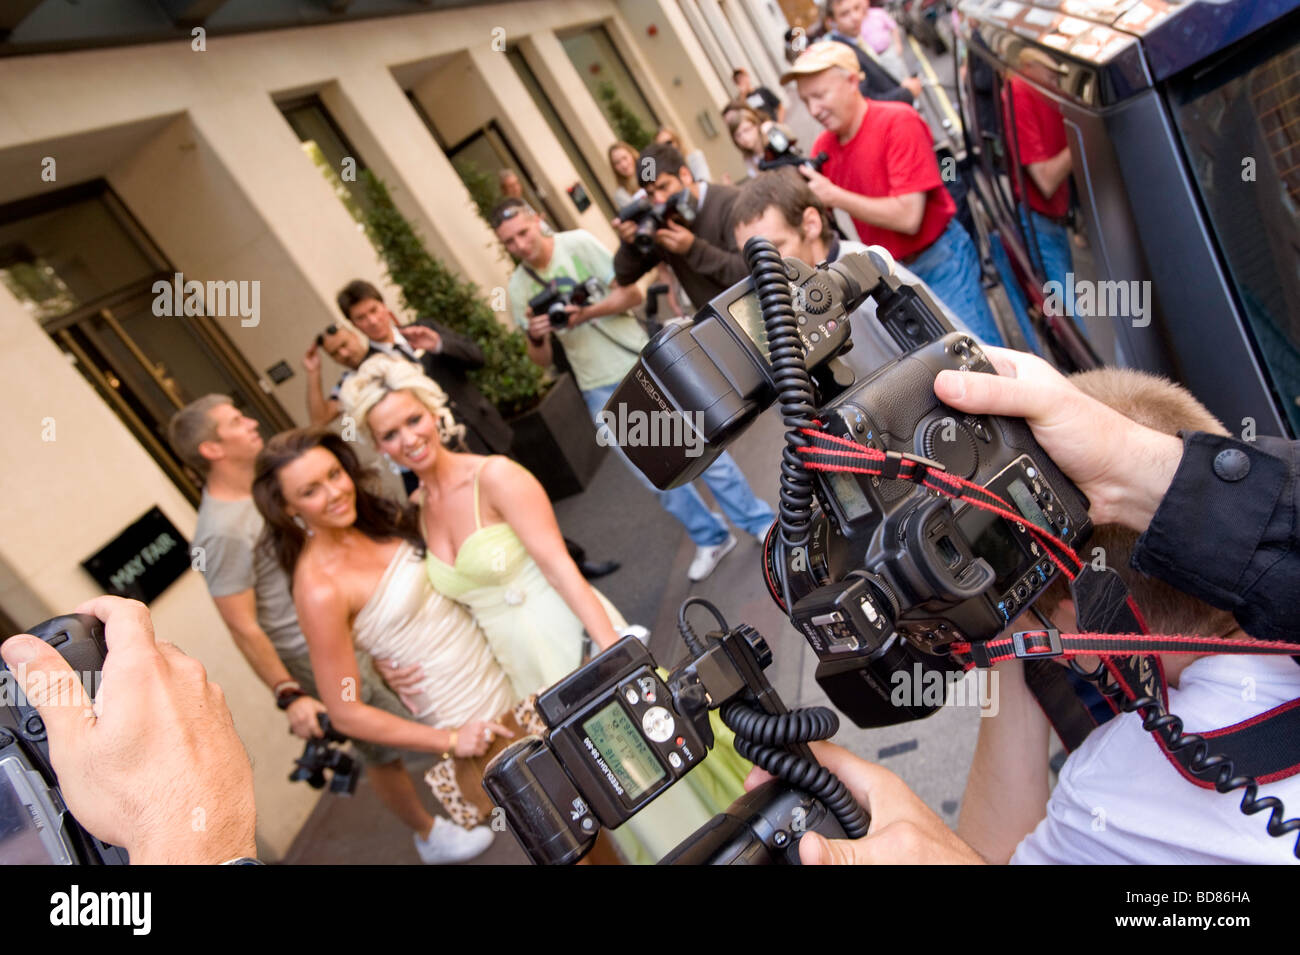 Paparazzi photographers at work photographing celebrities outside Mayfair hotel London United Kingdom Stock Photo